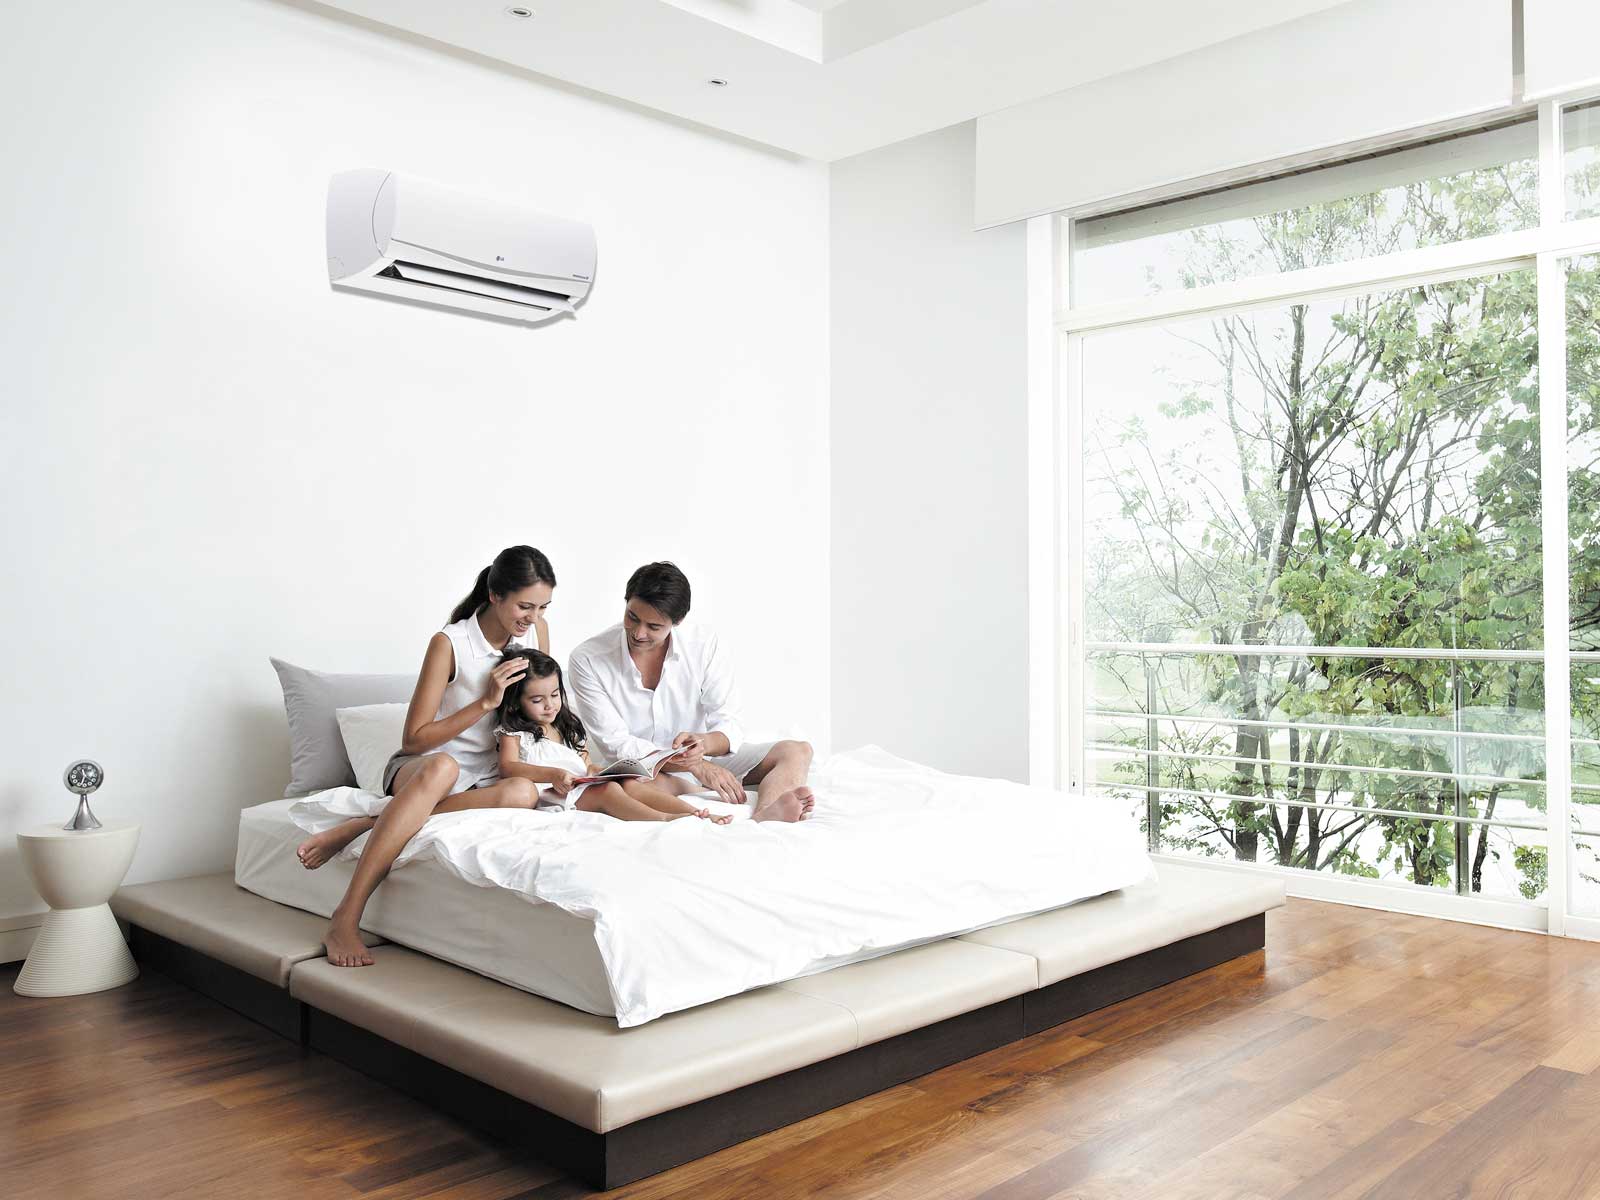 air conditioner wallpaper,bed,bedroom,furniture,room,mattress